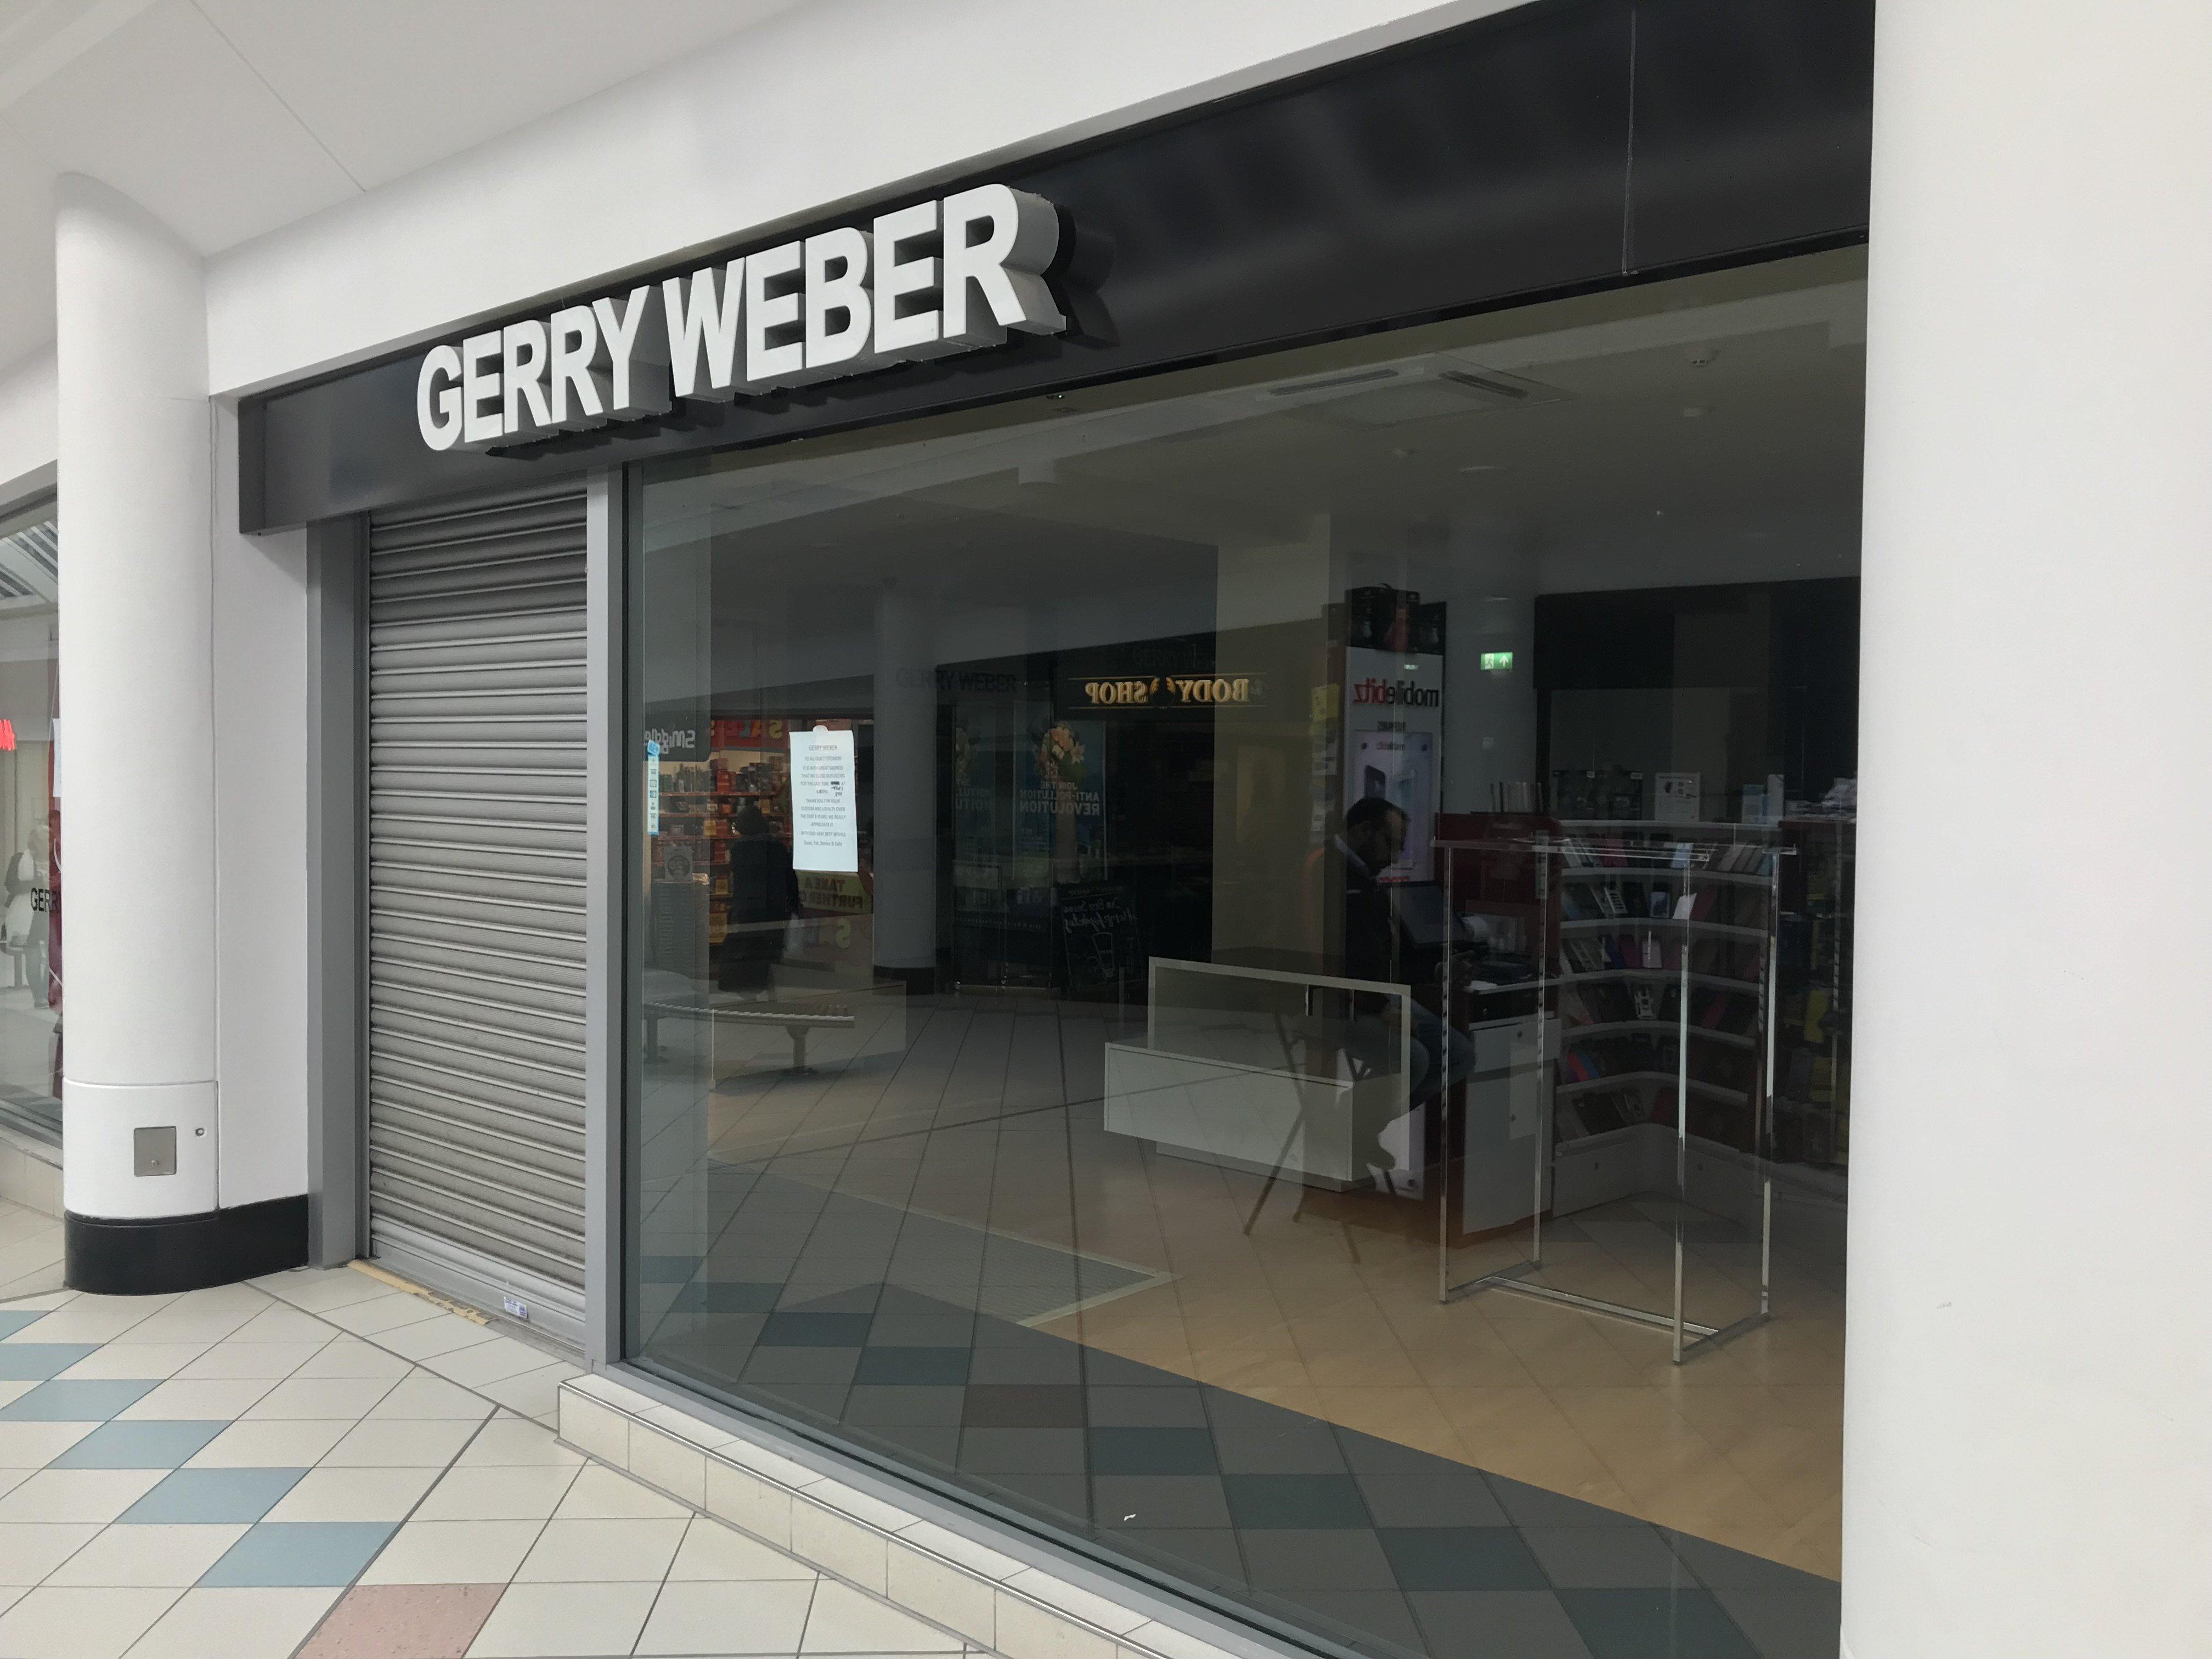 Gerry Weber has closed its Horsham store SUS-190910-150121001